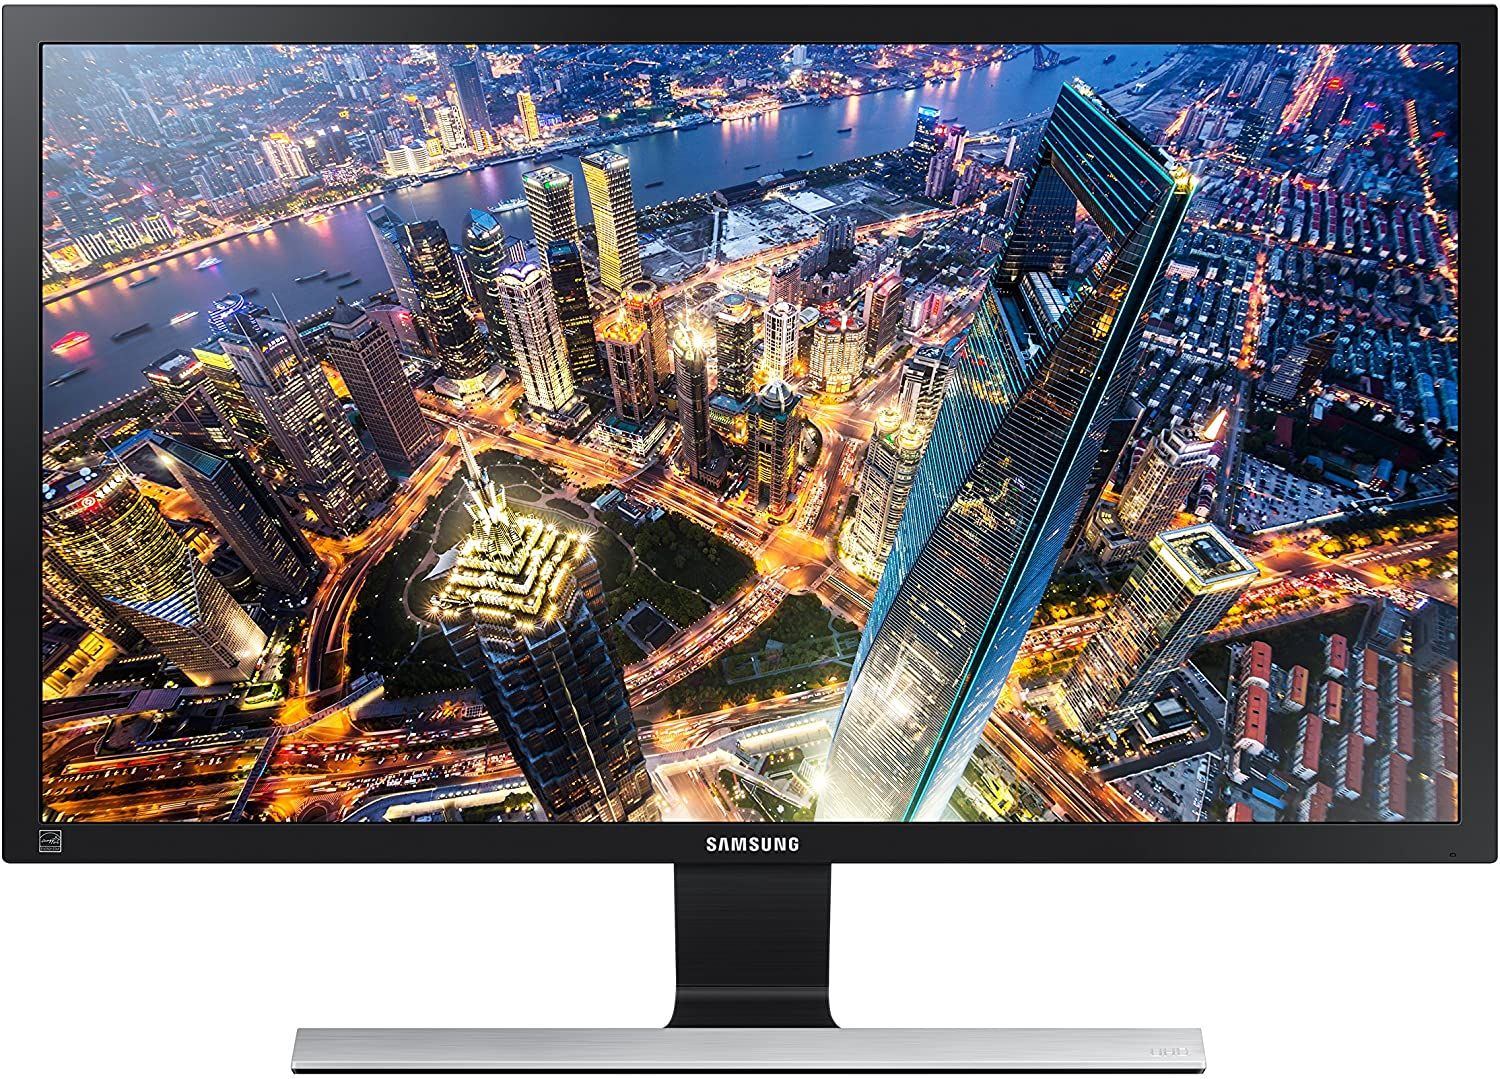 Samsung 28-Inch UE570 UHD 4K Gaming Monitor a